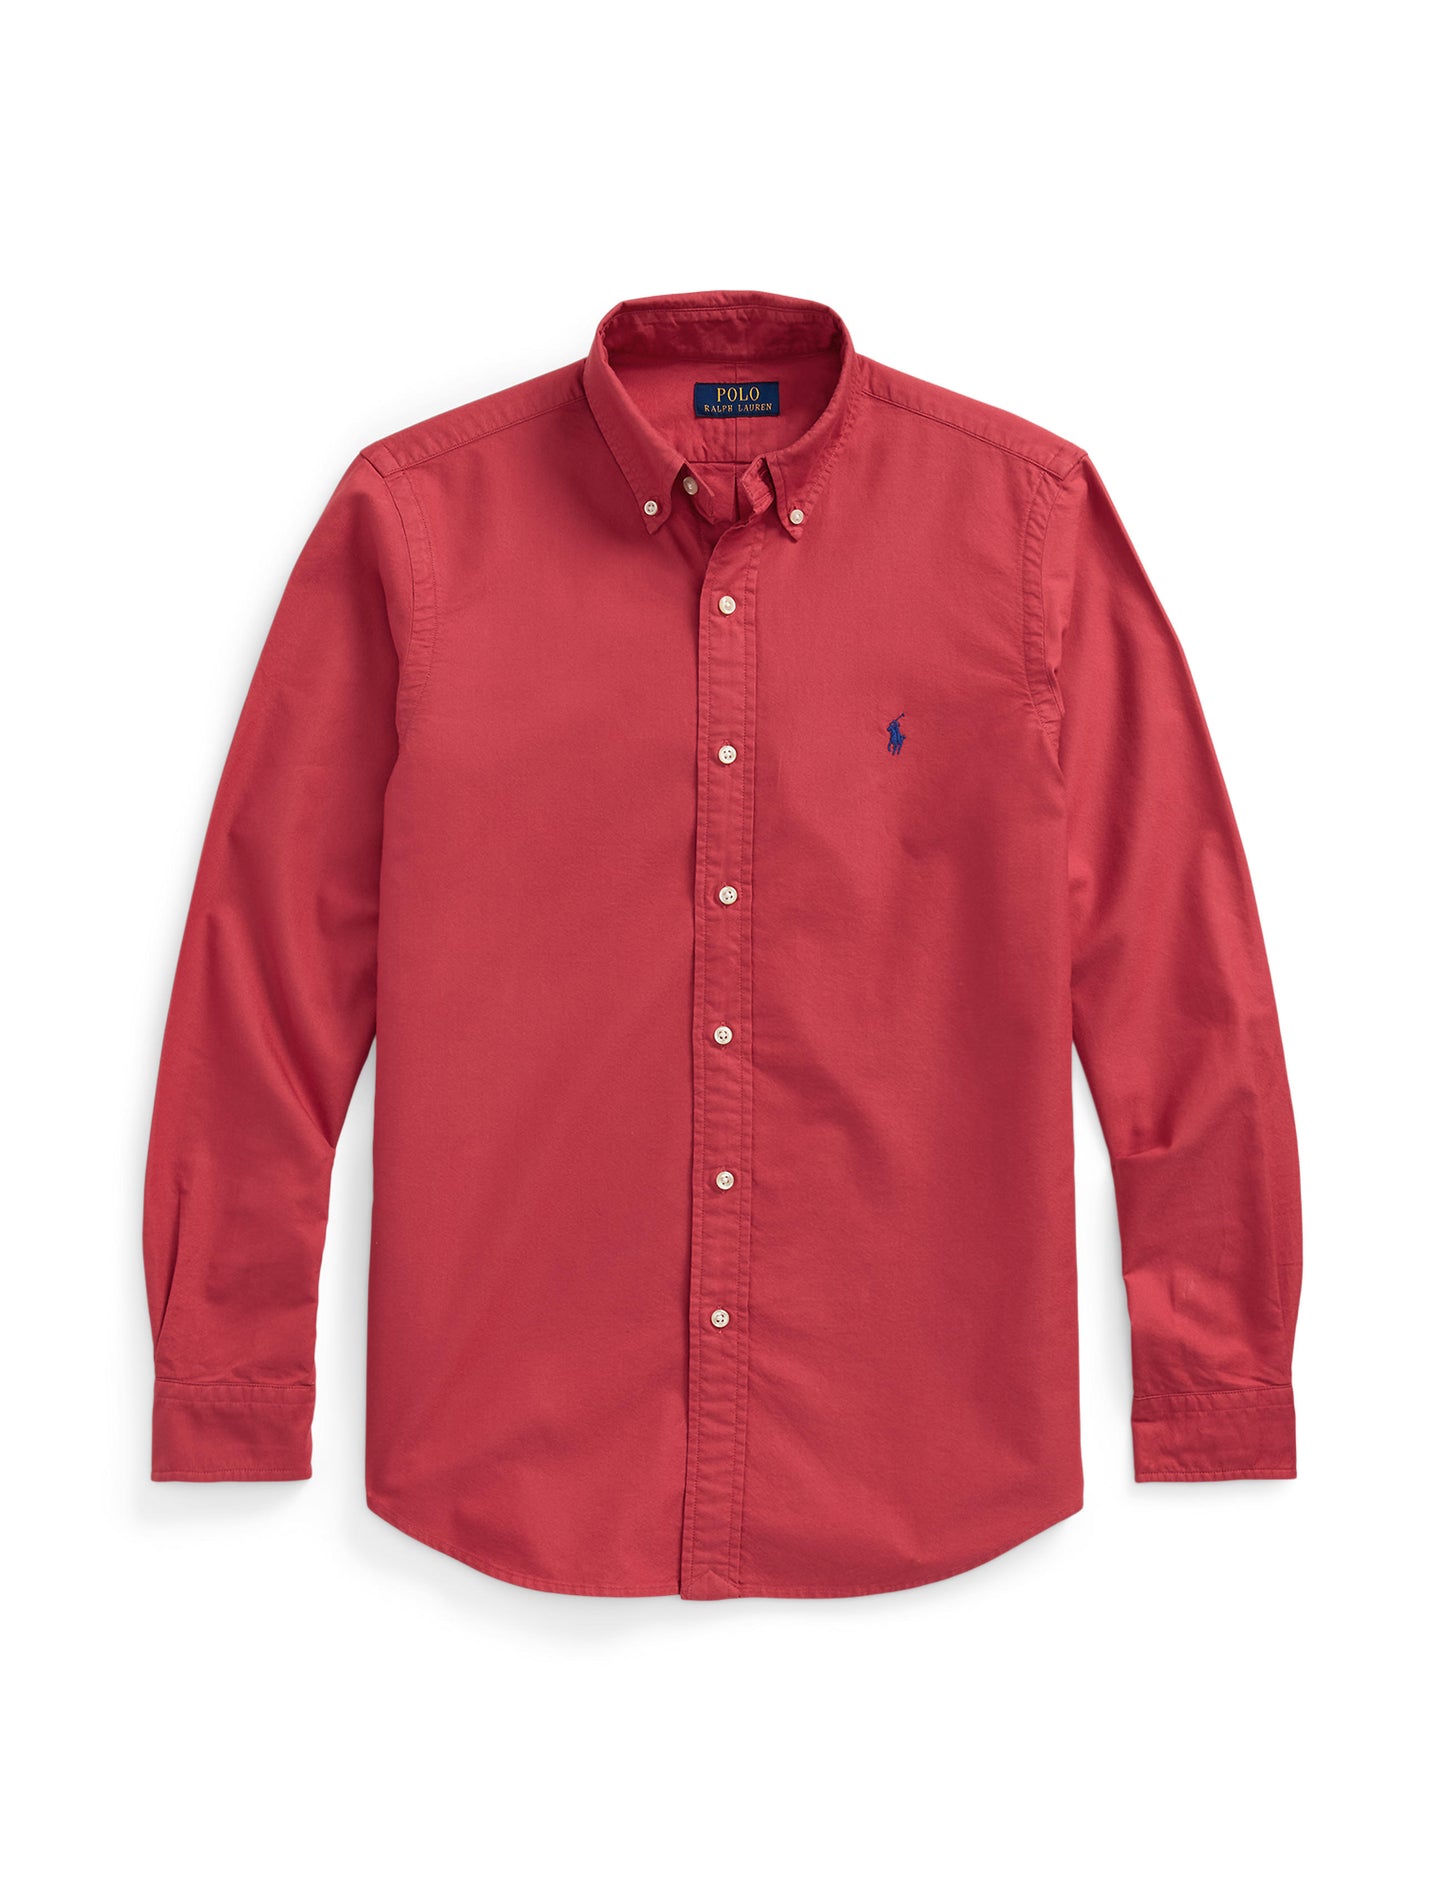 Polo Ralph Lauren Oxford Shirt Sunrise Red